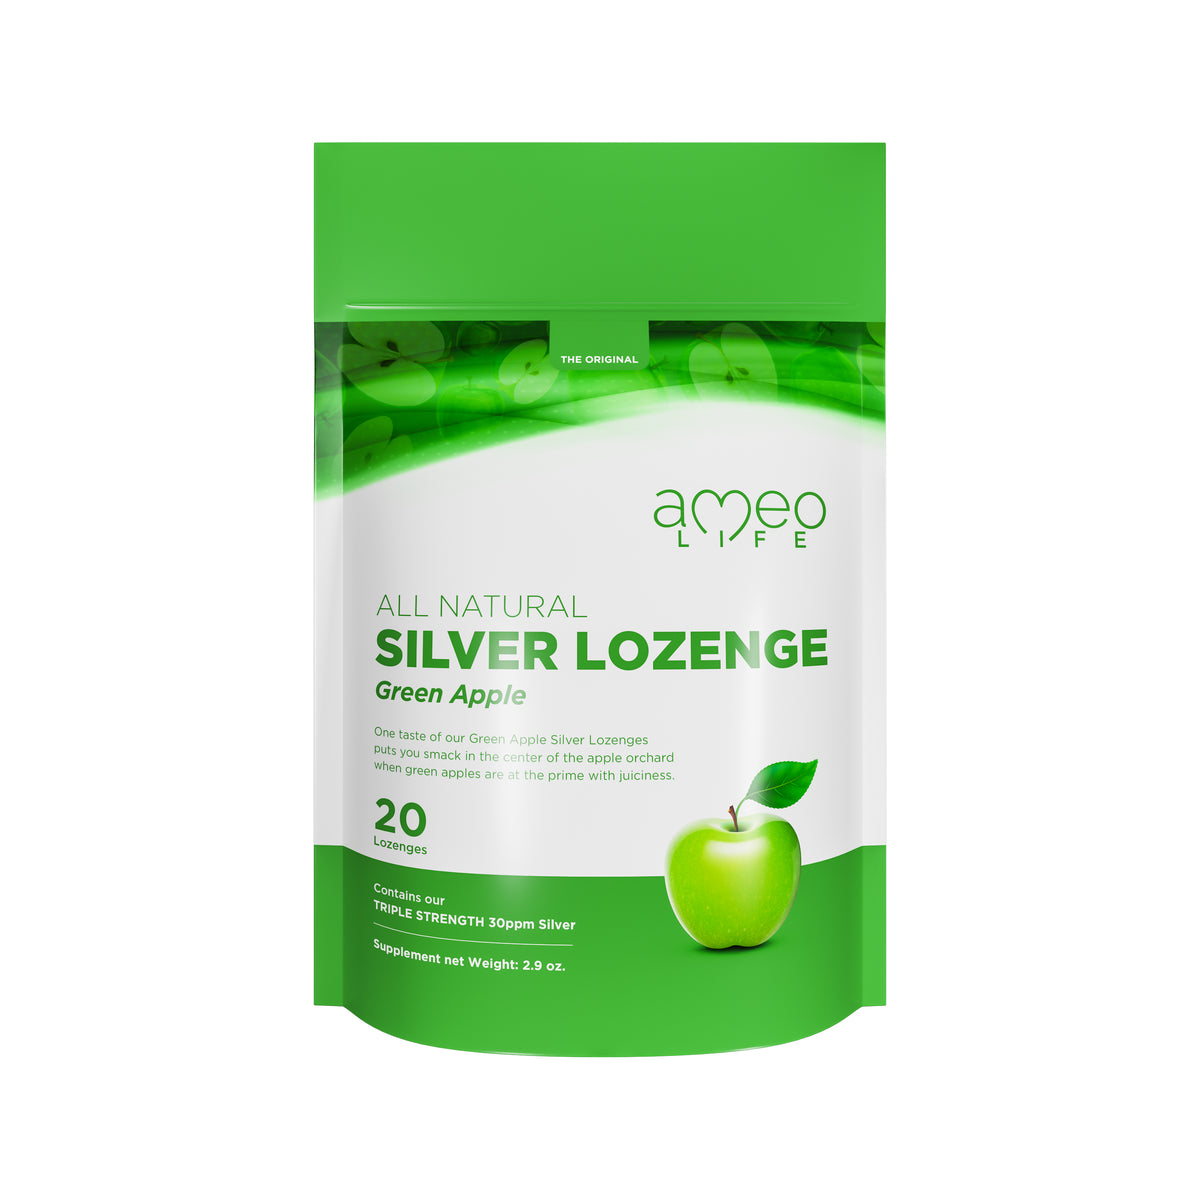 Green Apple Silver Lozenges